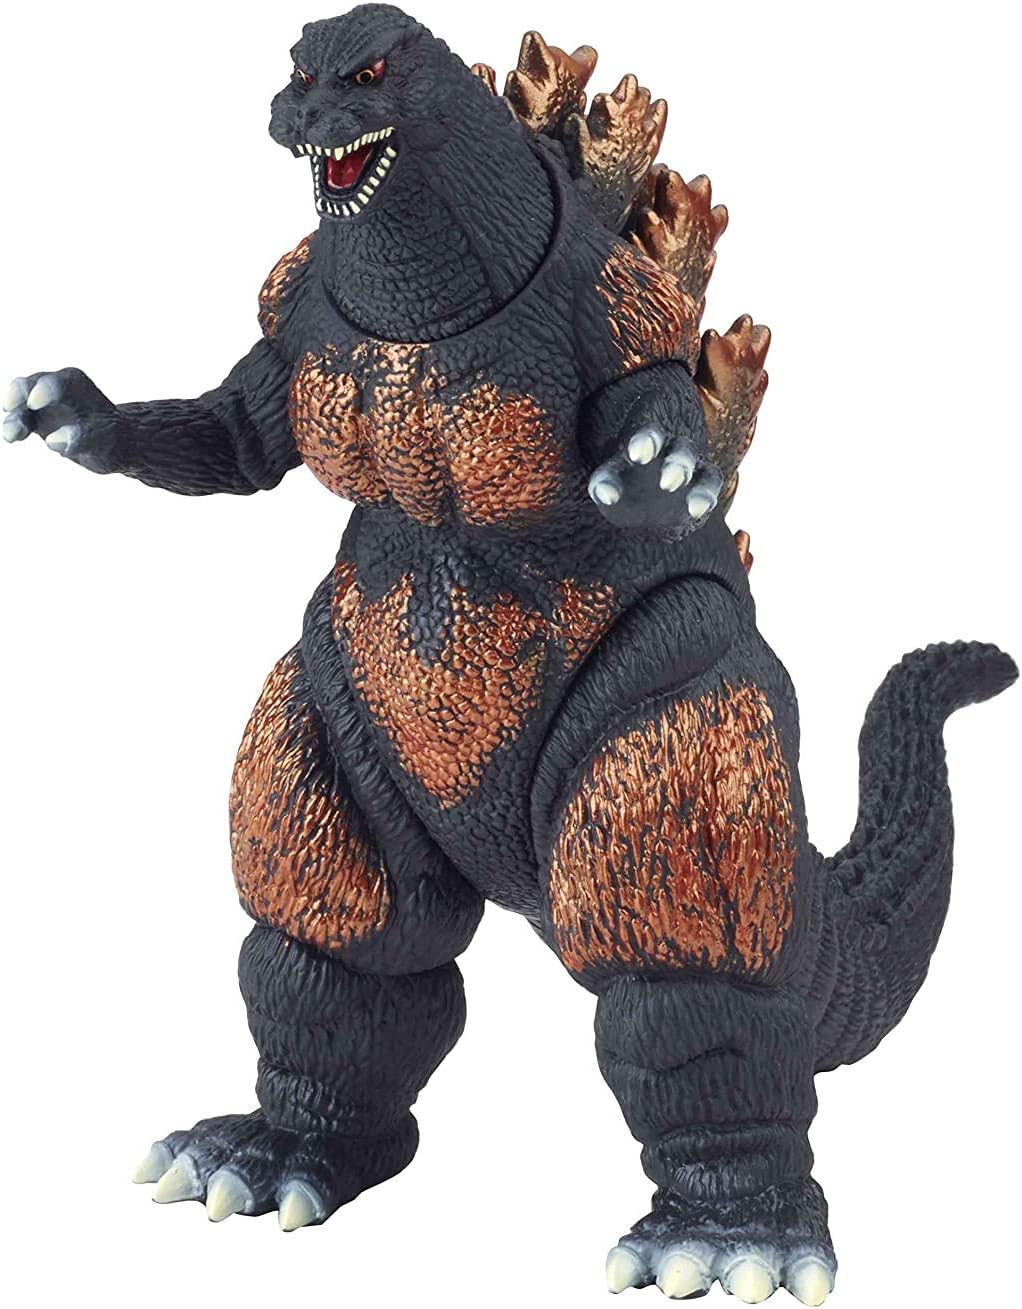 Bandai Movie Monster: Burning Godzilla 